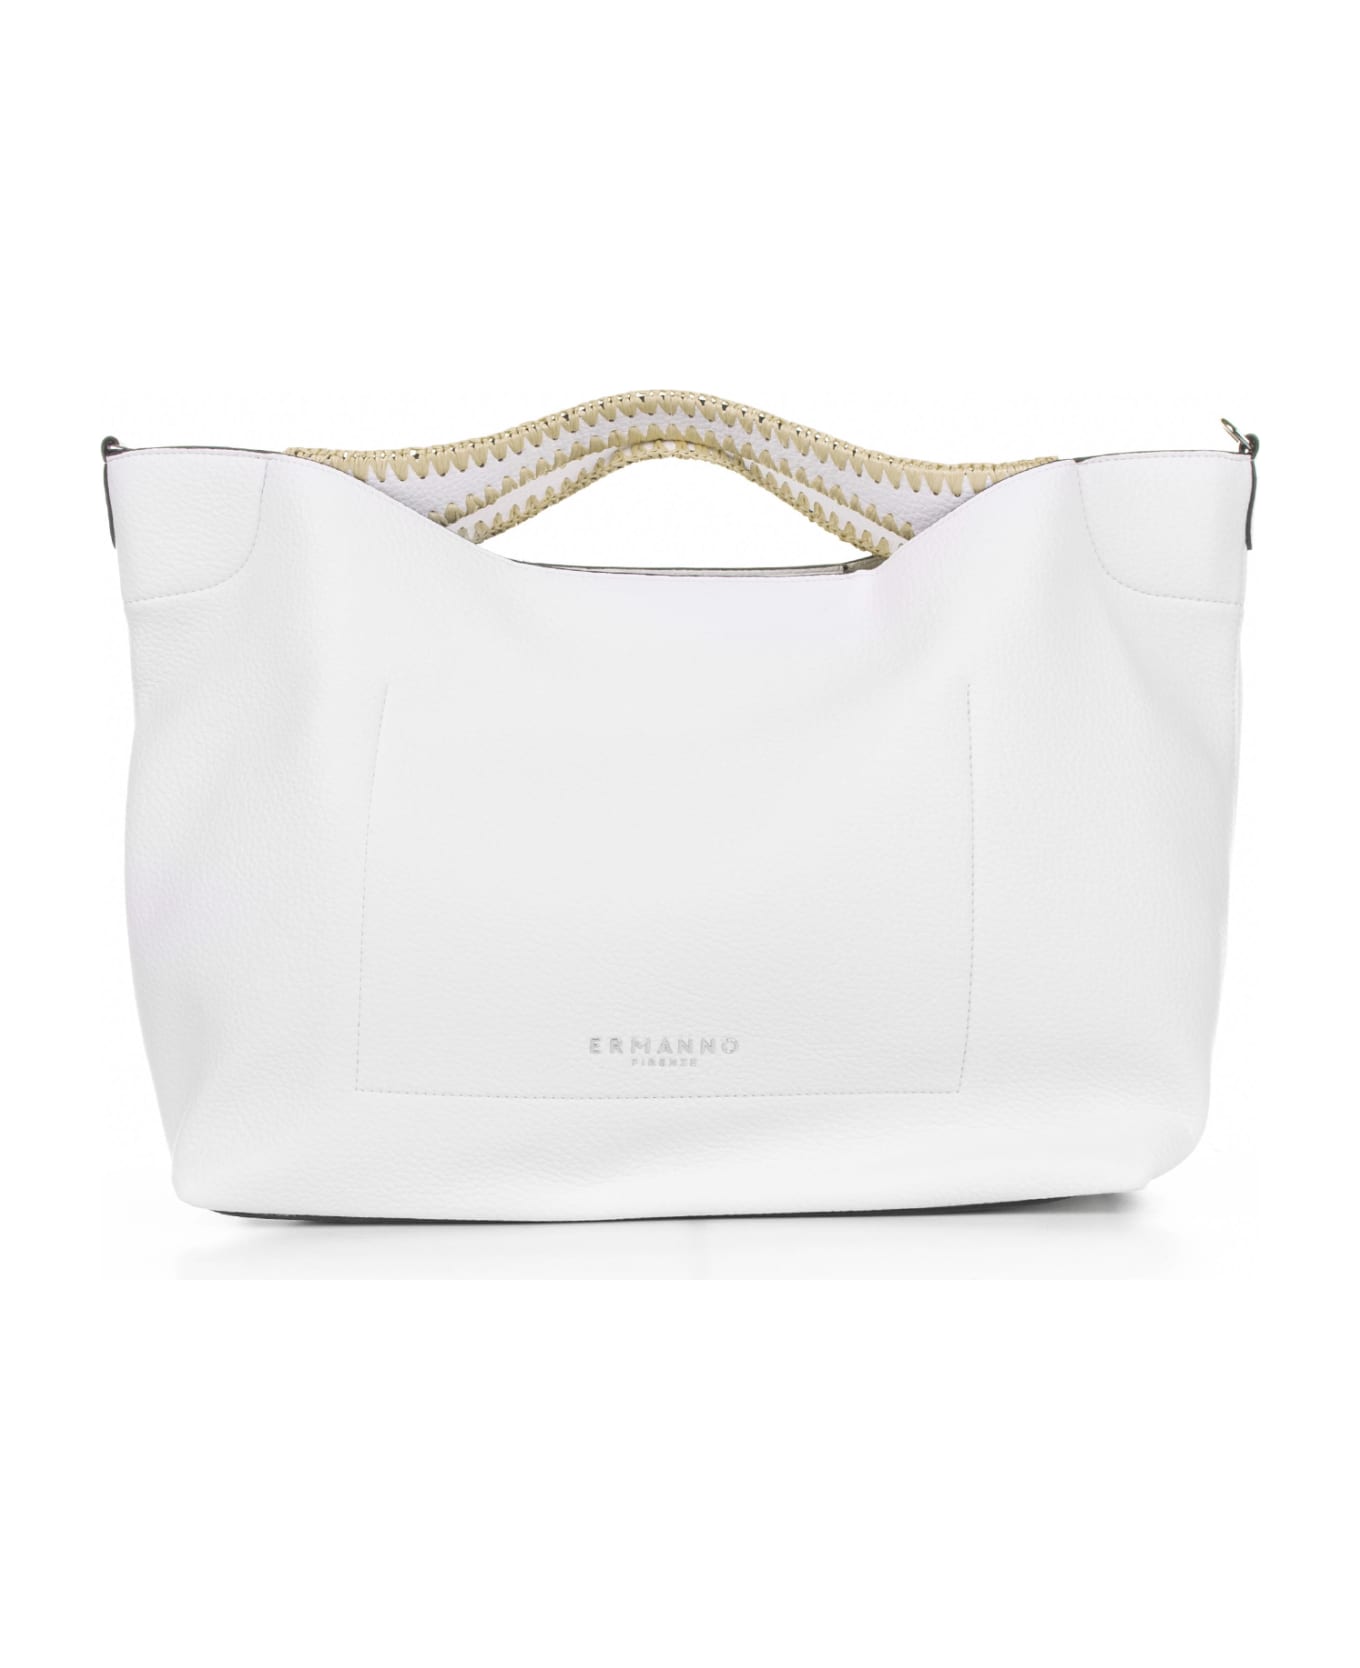 Ermanno Scervino Rachele Large White Leather Handbag - BIANCO トートバッグ